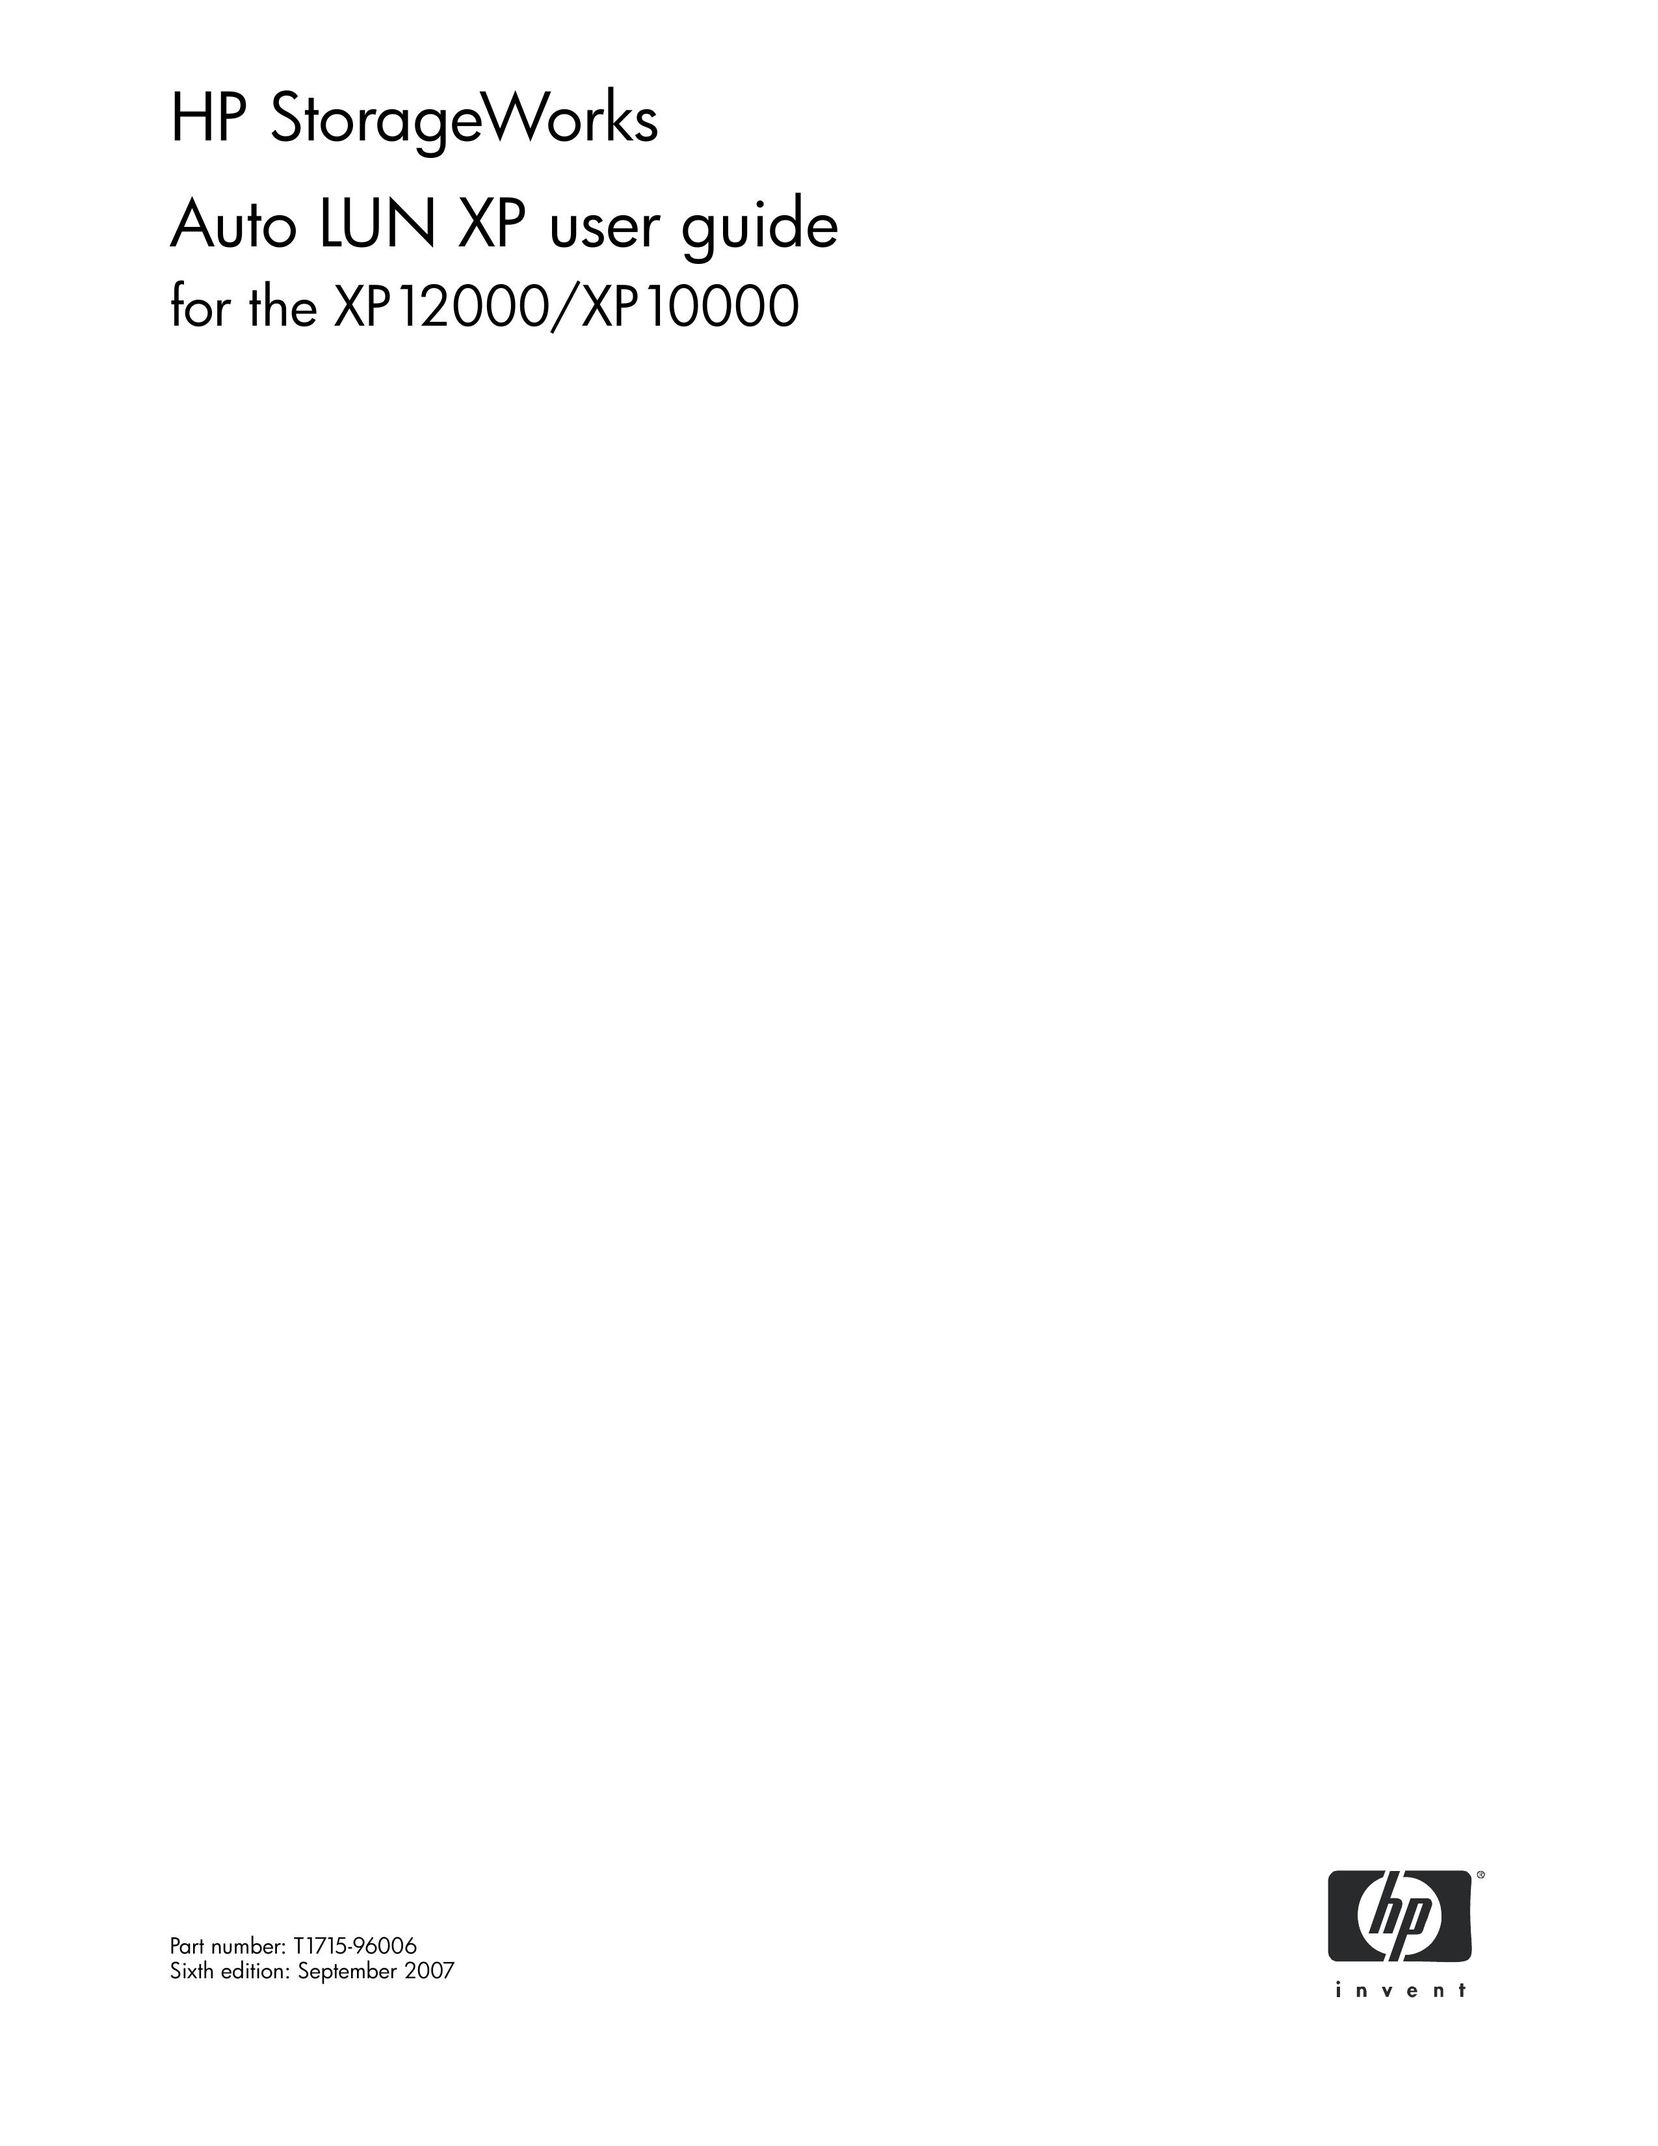 HP (Hewlett-Packard) XP12000 Portable Media Storage User Manual